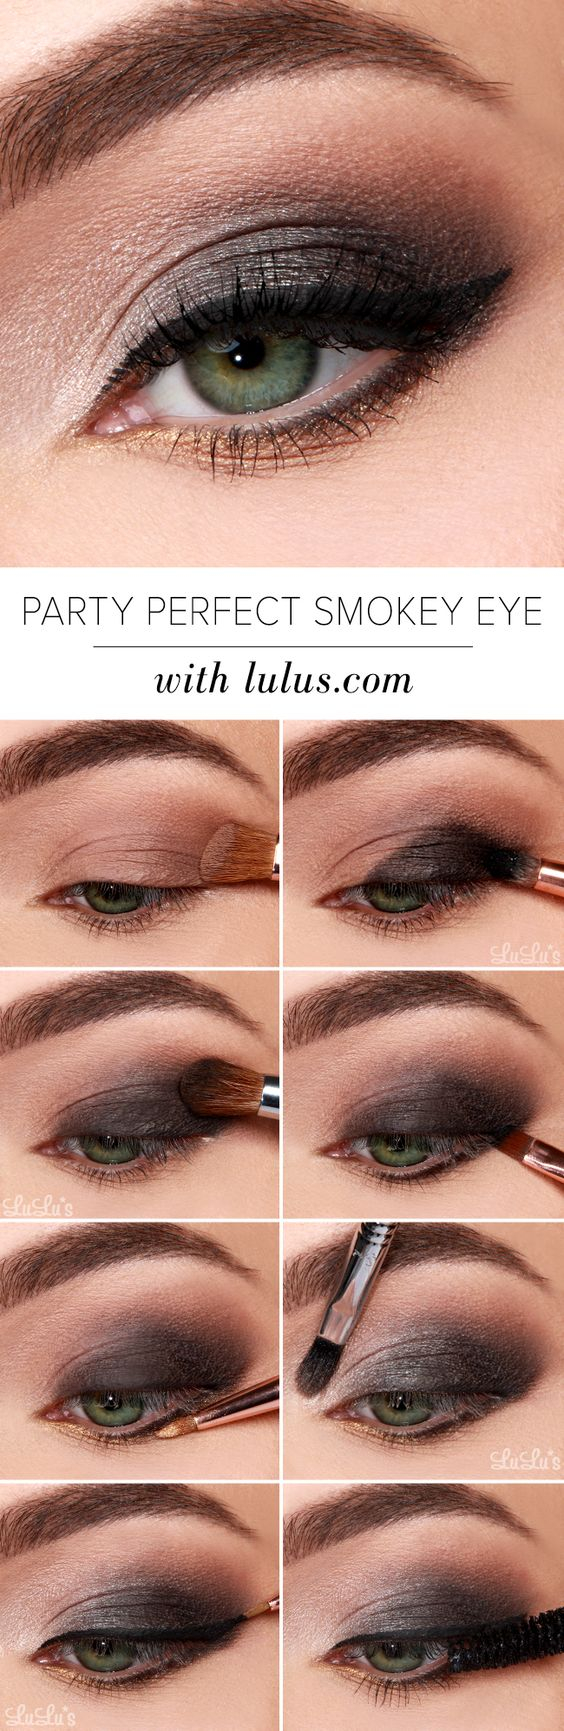 Easy Smokey Eye Makeup 40 Hottest Smokey Eye Makeup Ideas 2019 Smokey Eye Tutorials For